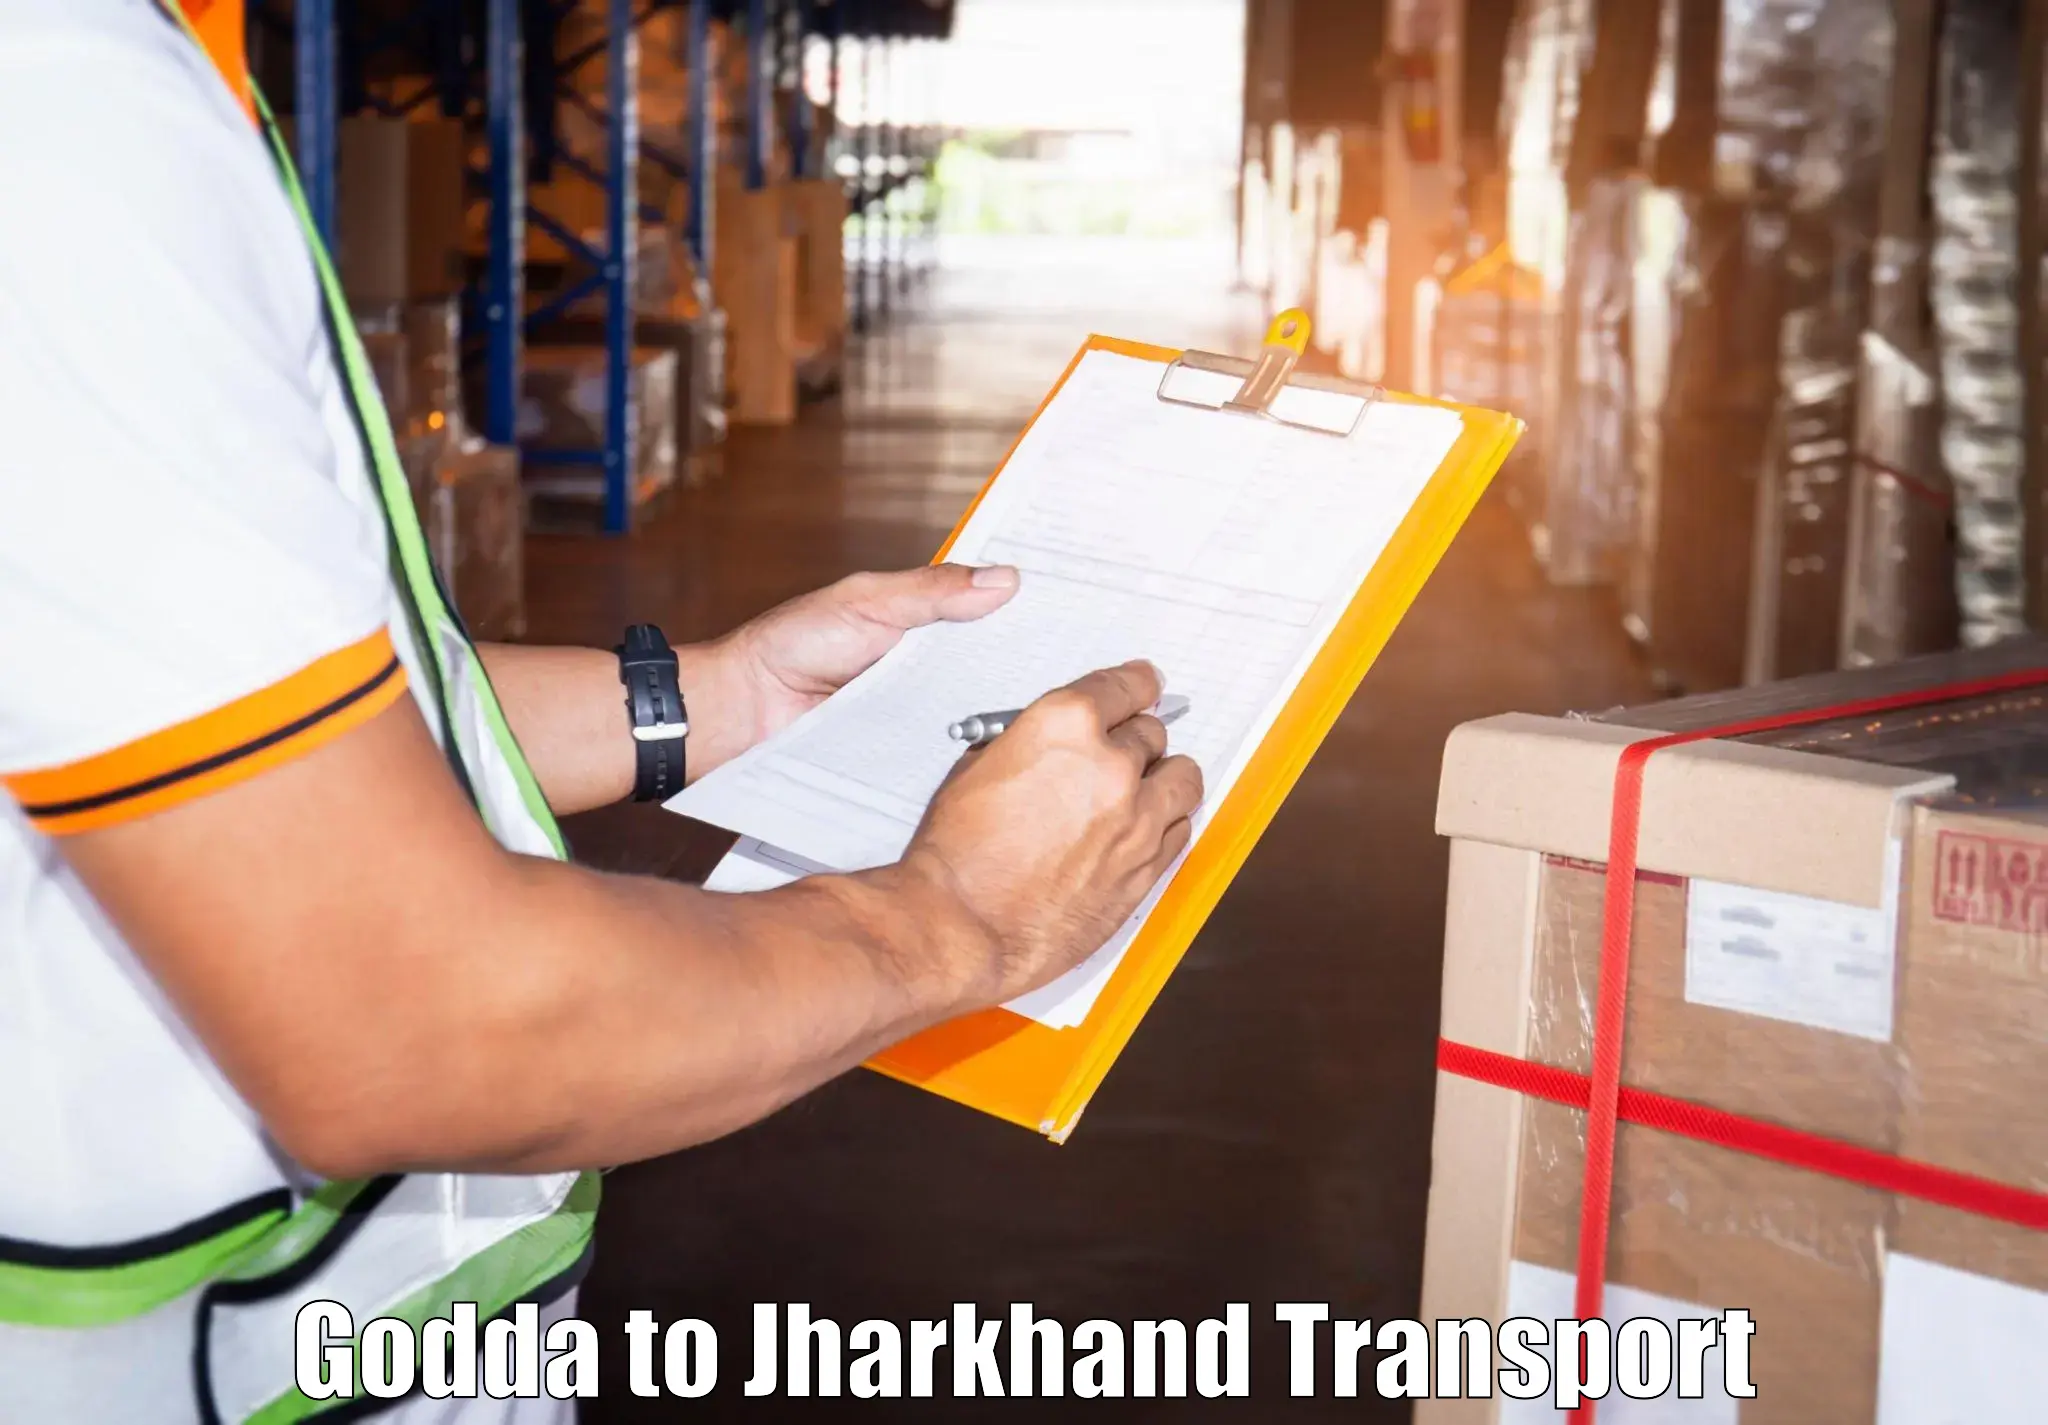 Shipping services in Godda to Ranchi